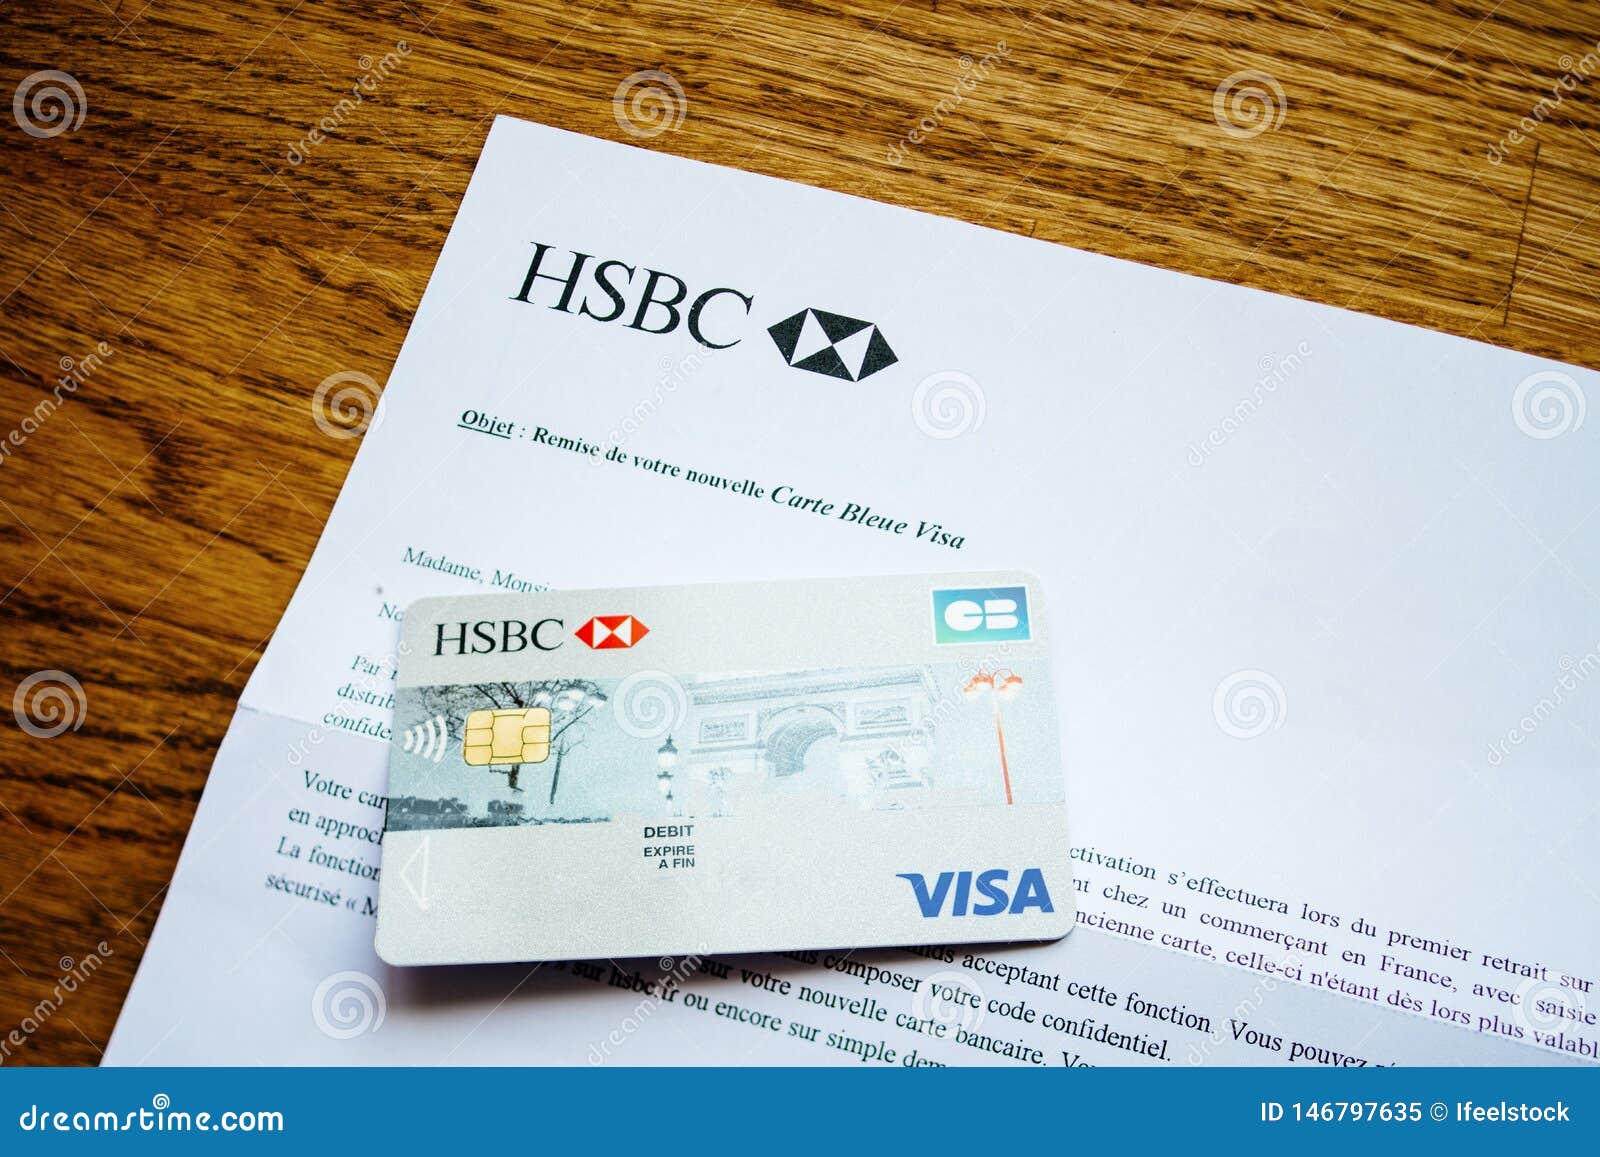 new-hsbc-visa-debit-card-chip-security-contactless-editorial-image